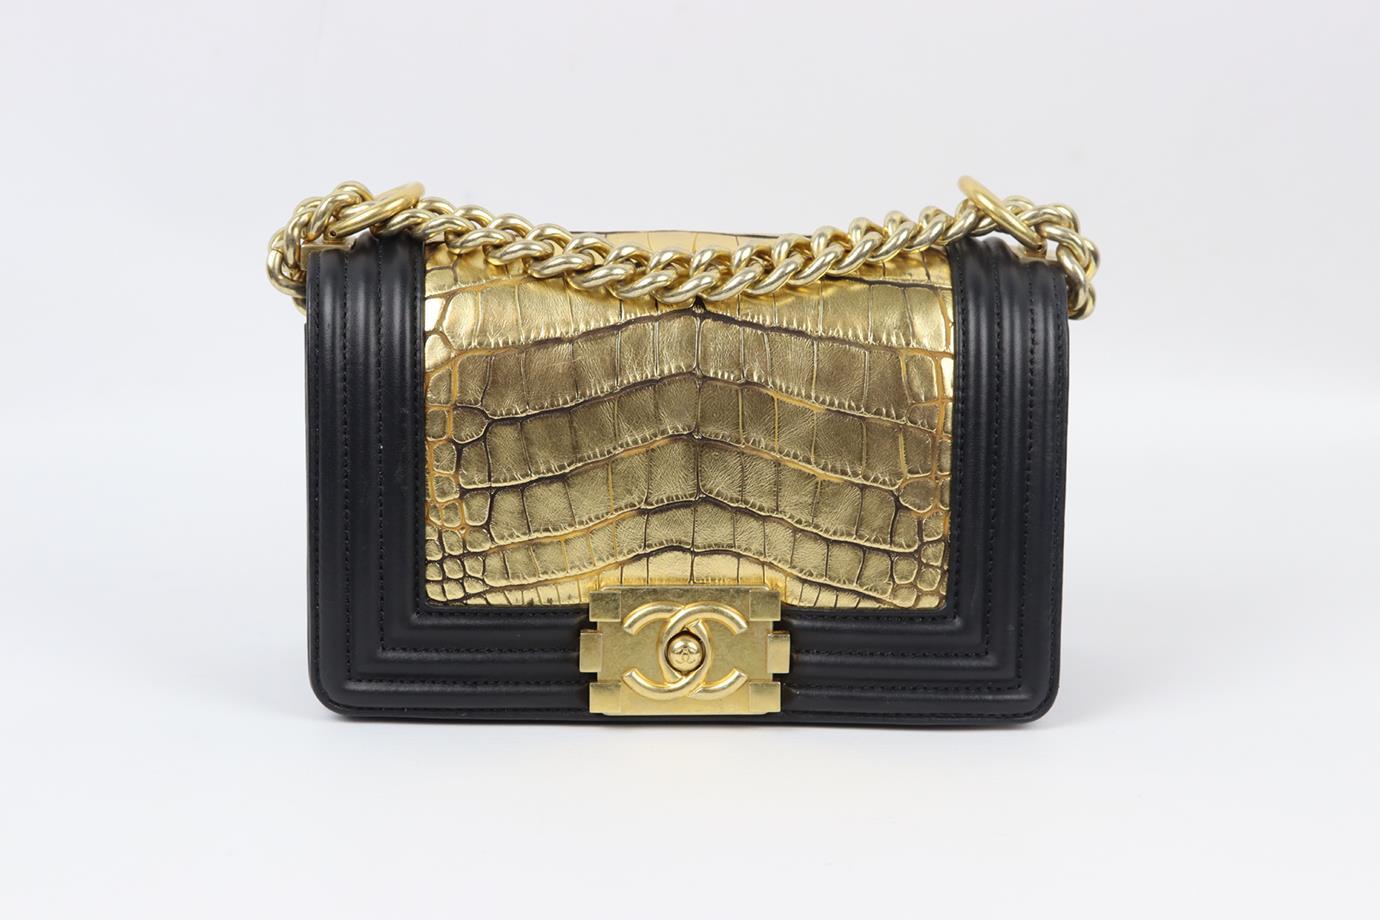 <ul>
<li>Chanel 2012 Boy small alligator and leather shoulder bag.</li>
<li>Made from gold and black alligator and black leather with matching leather interior and antiqued-gold chain shoulder straps.</li>
<li>Black and gold.</li>
<li>Push lock